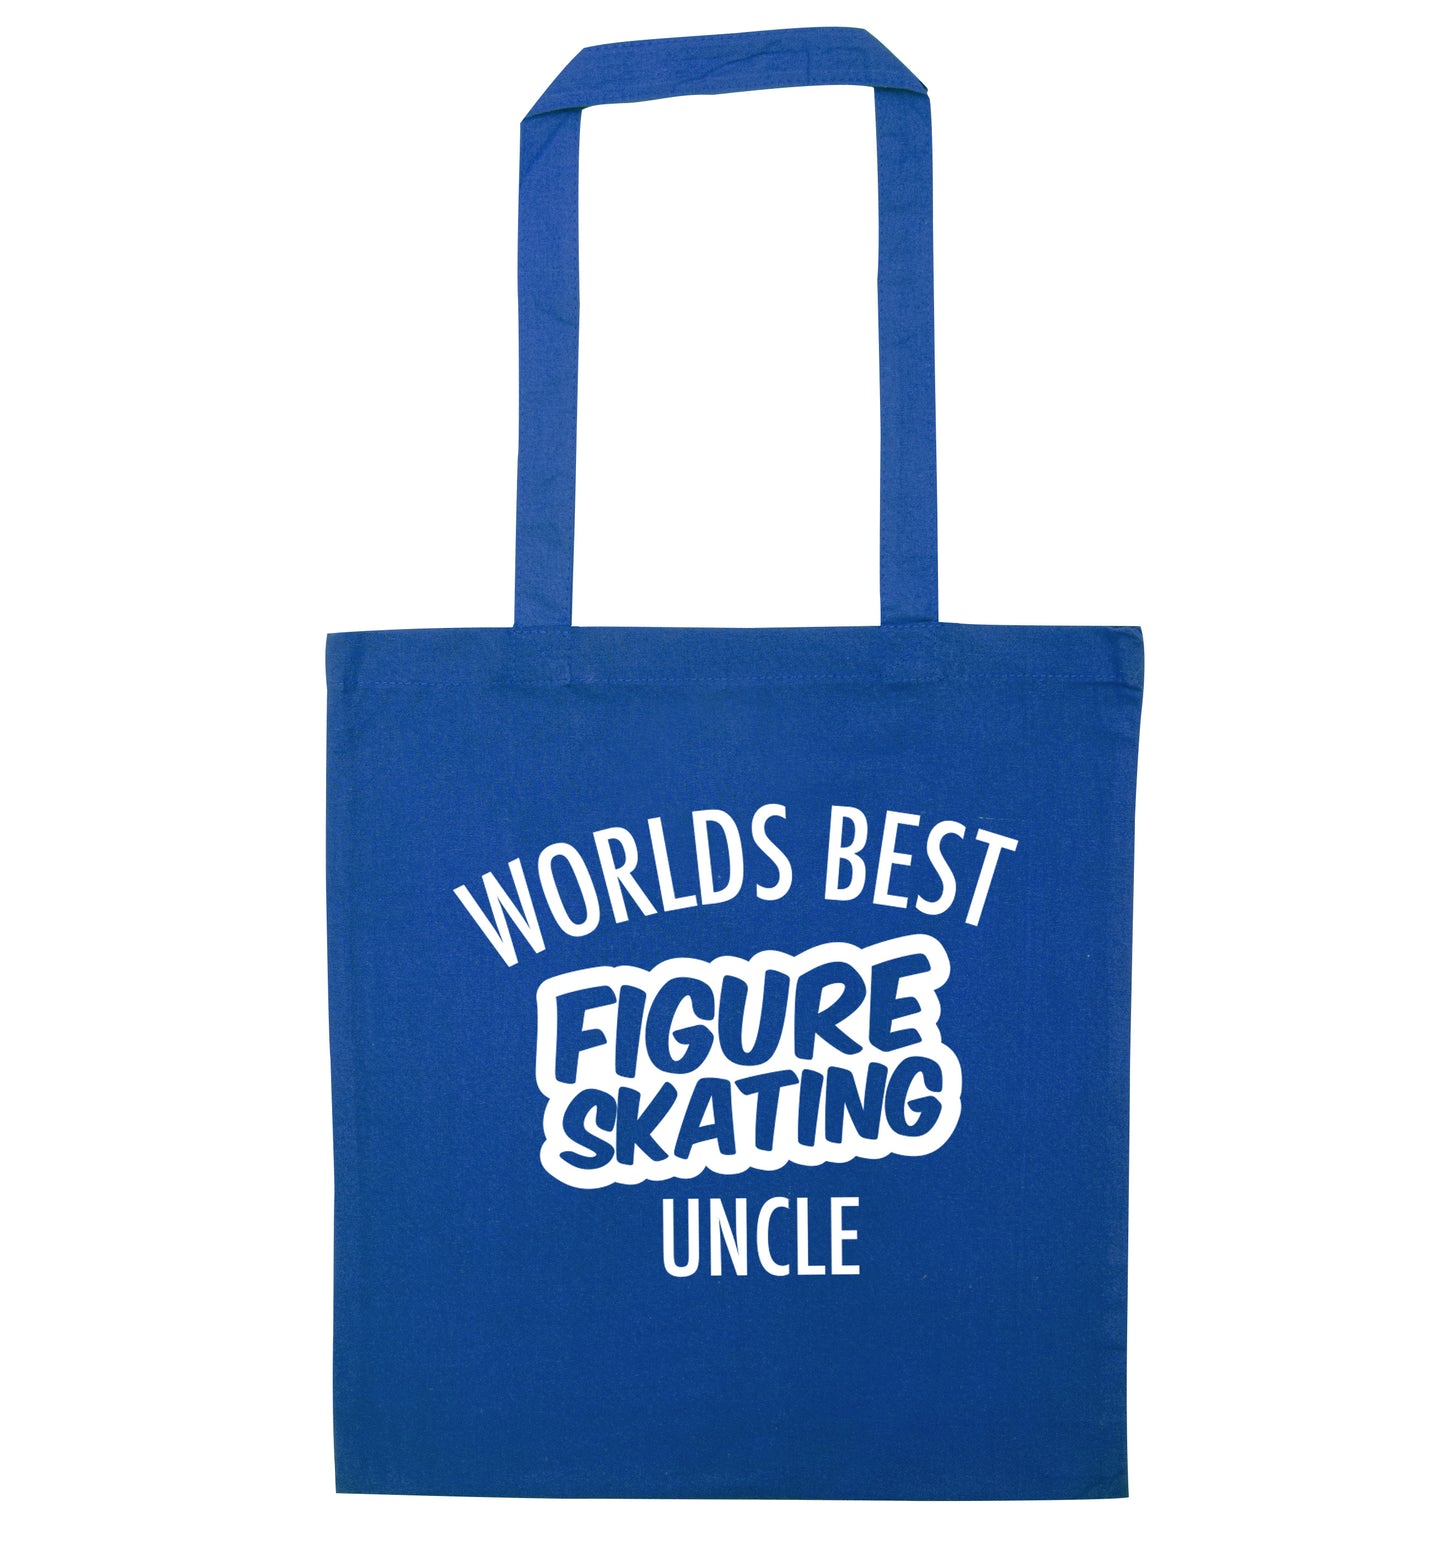 Worlds best figure skating uncle blue tote bag